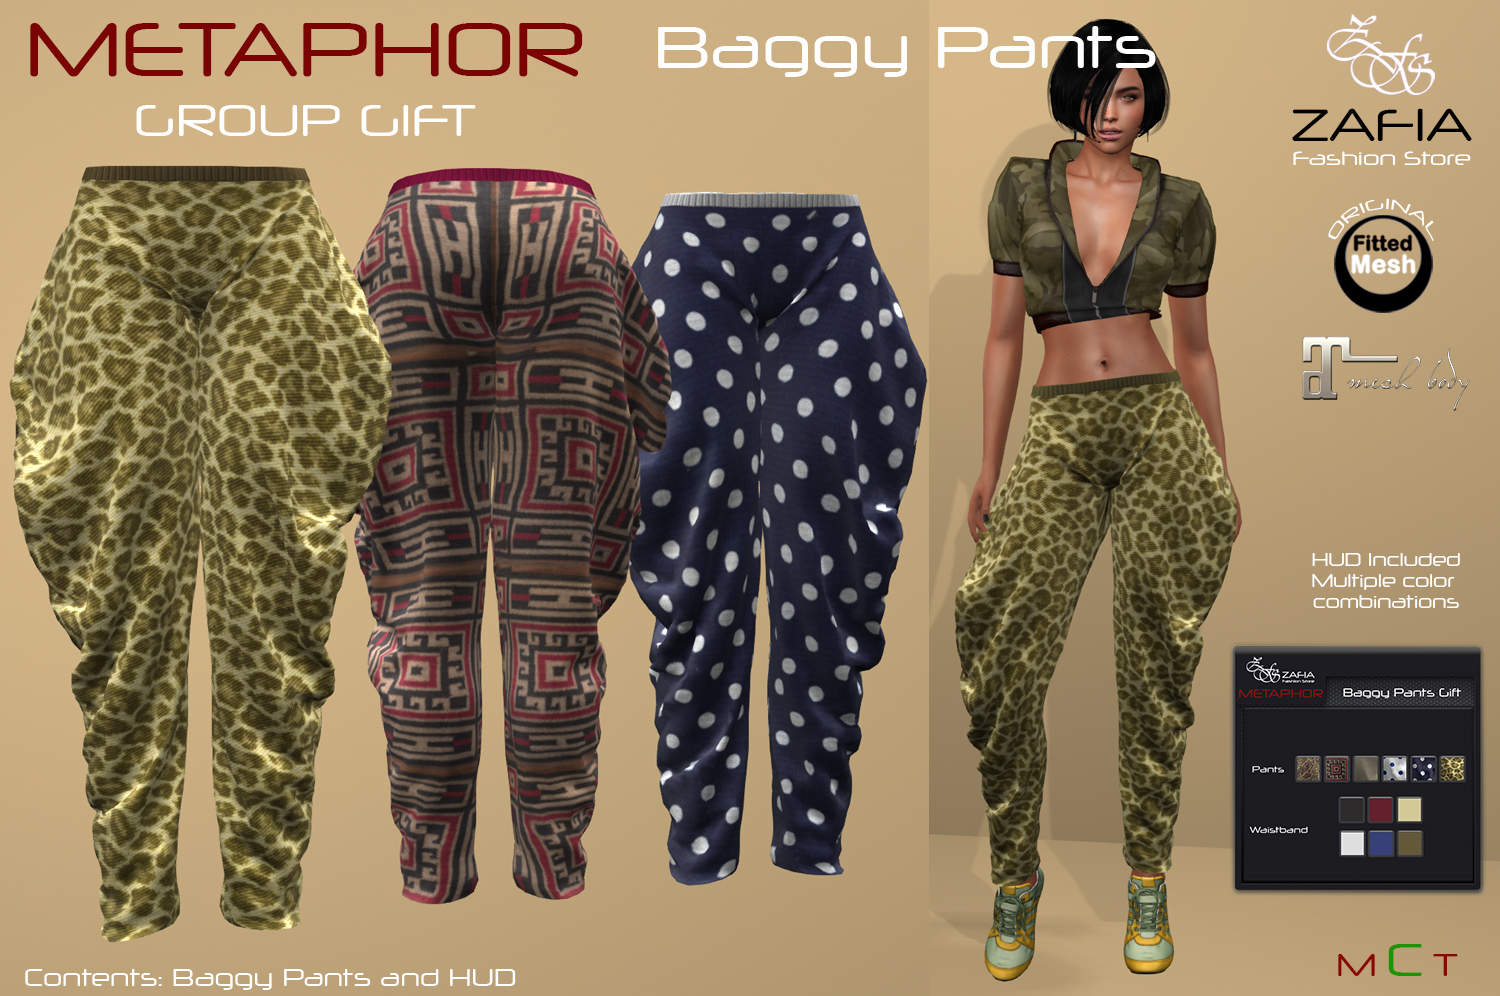 GROUP GIFT-METAPHOR Baggy Pants. – ZAFIA Fashion Store